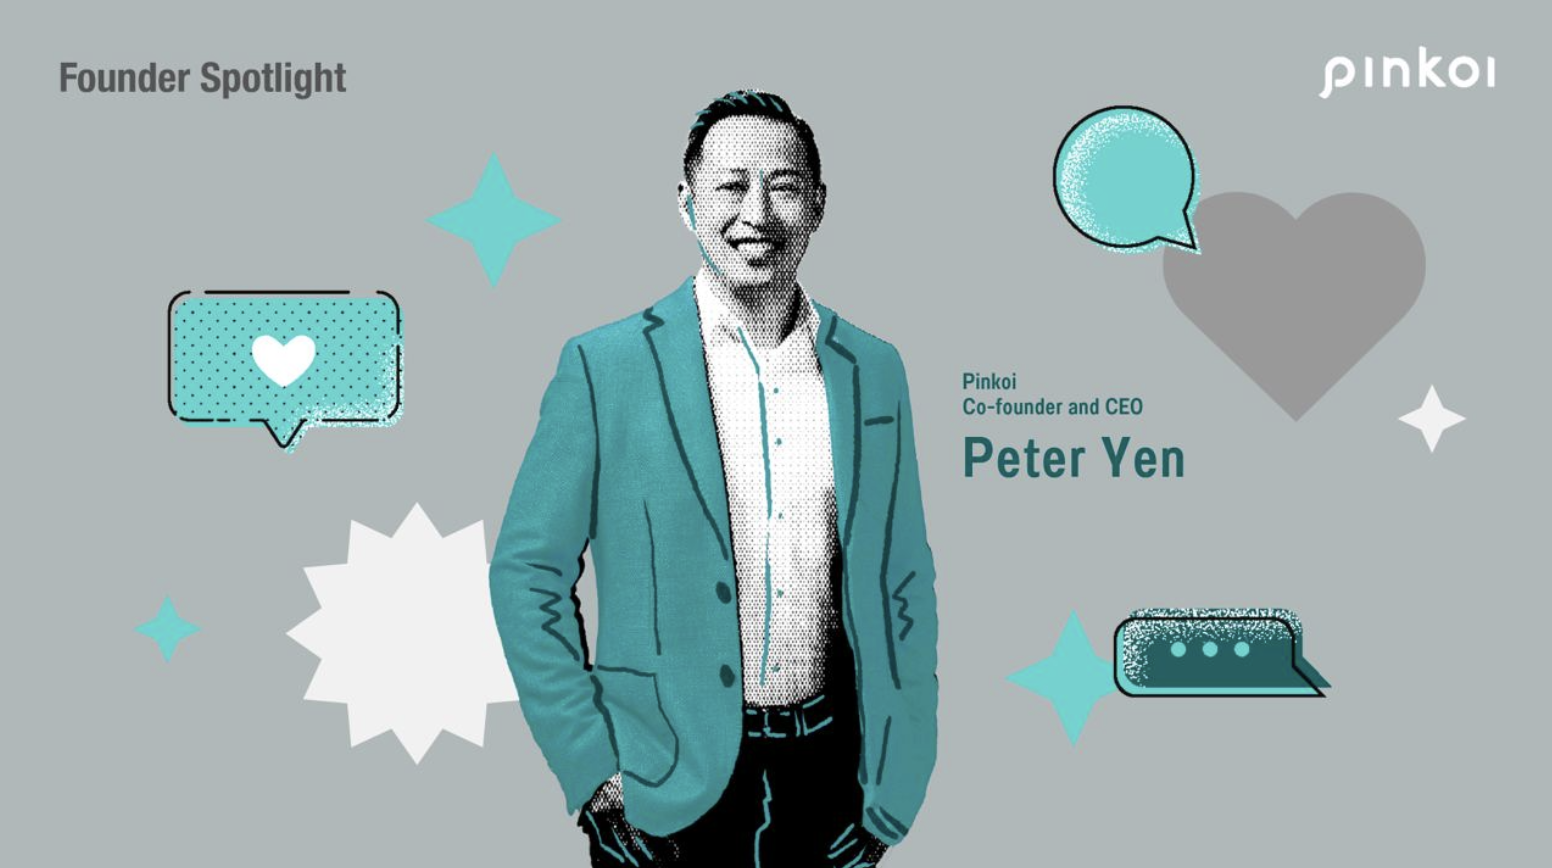 Pinkoi Co-founder & CEO, Peter Yen. Credit: Cherubic Ventures